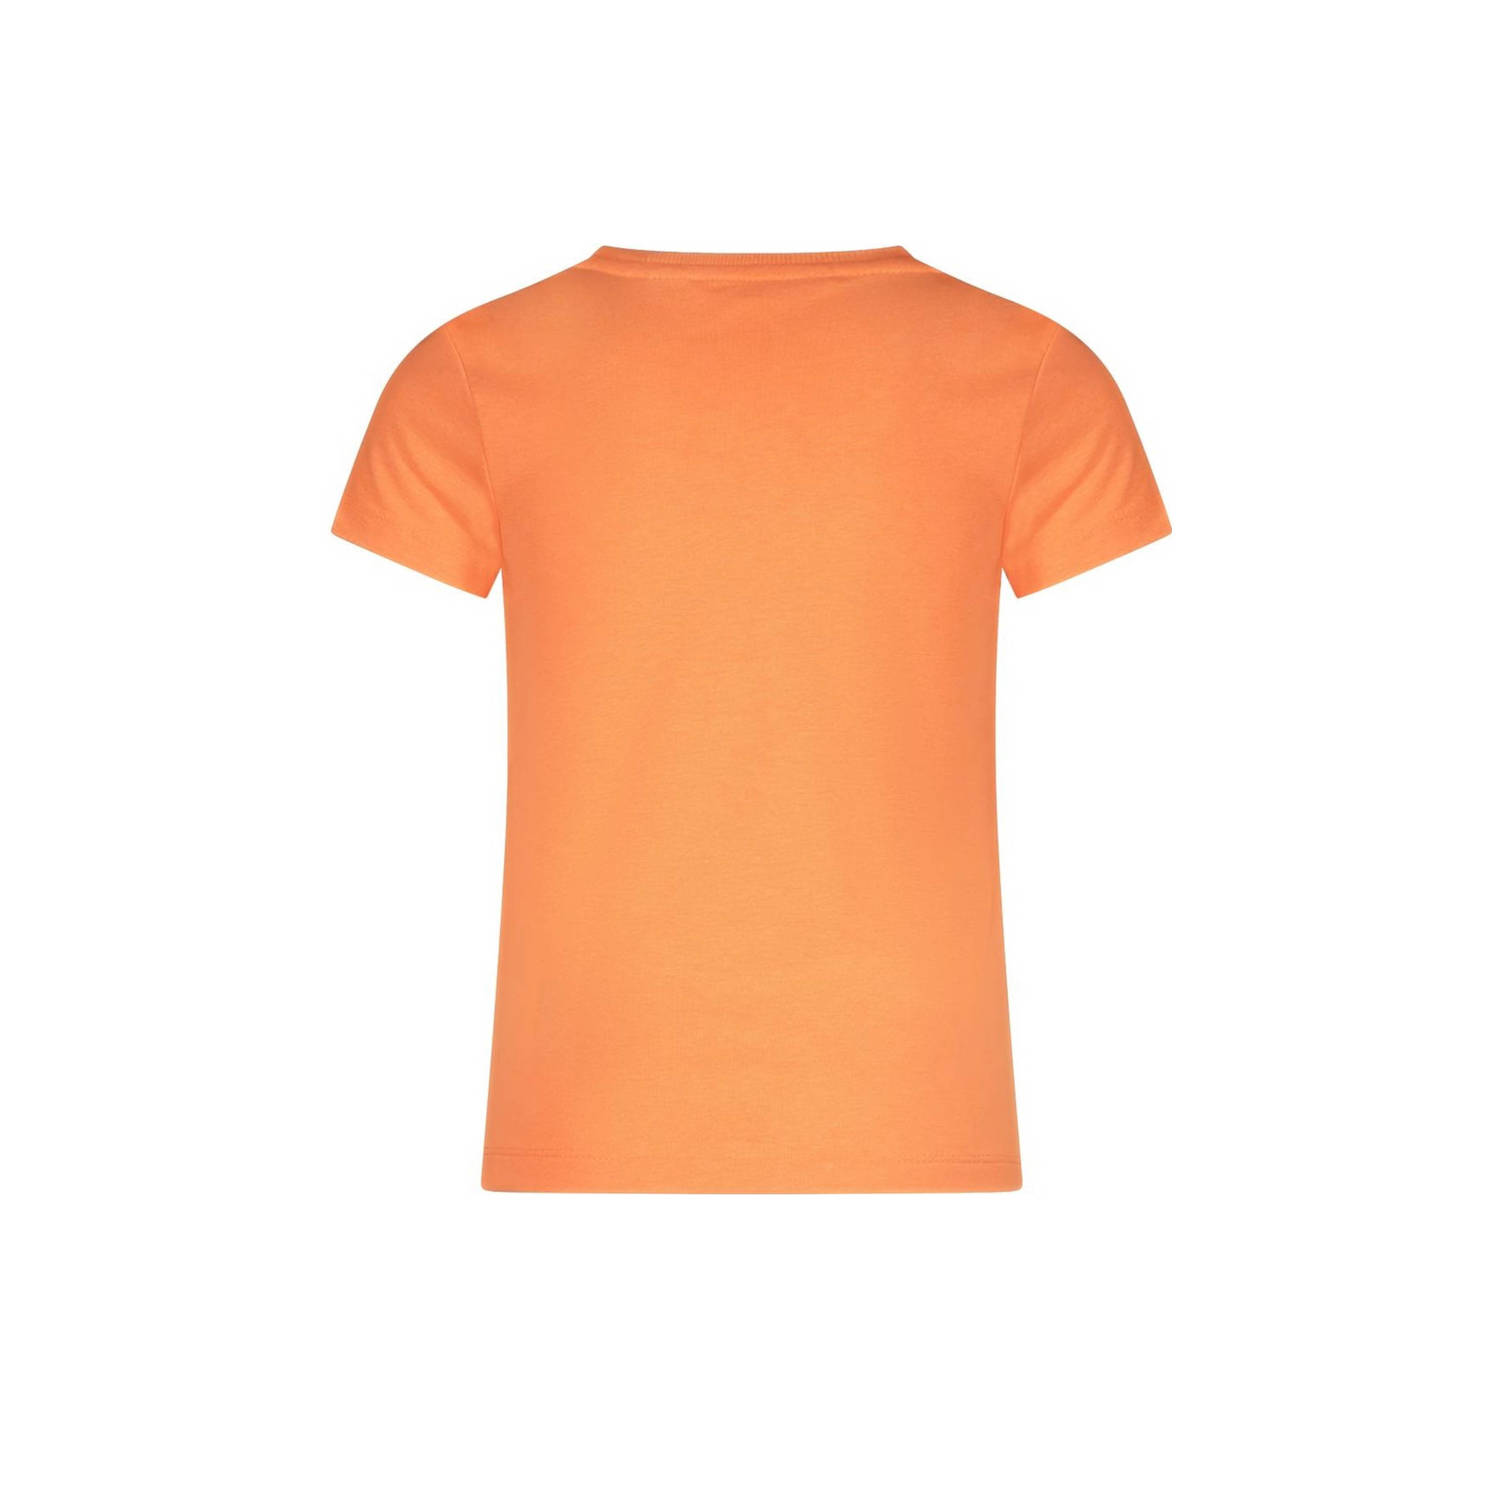 TYGO & vito T-shirt met printopdruk koraal